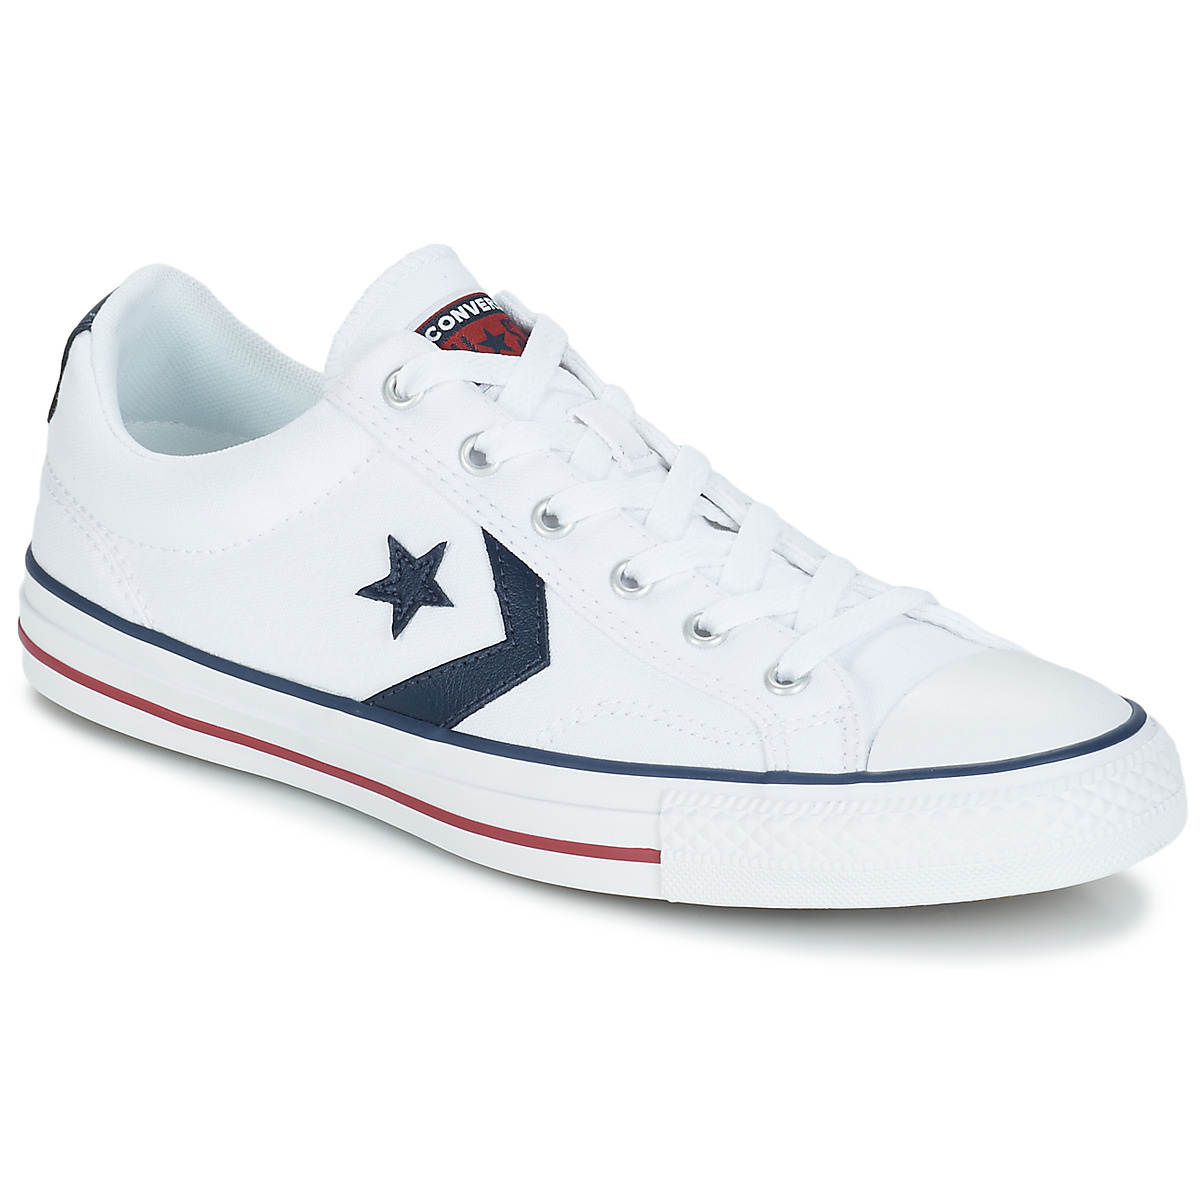 Converse STAR PLAYER OX White - Free 